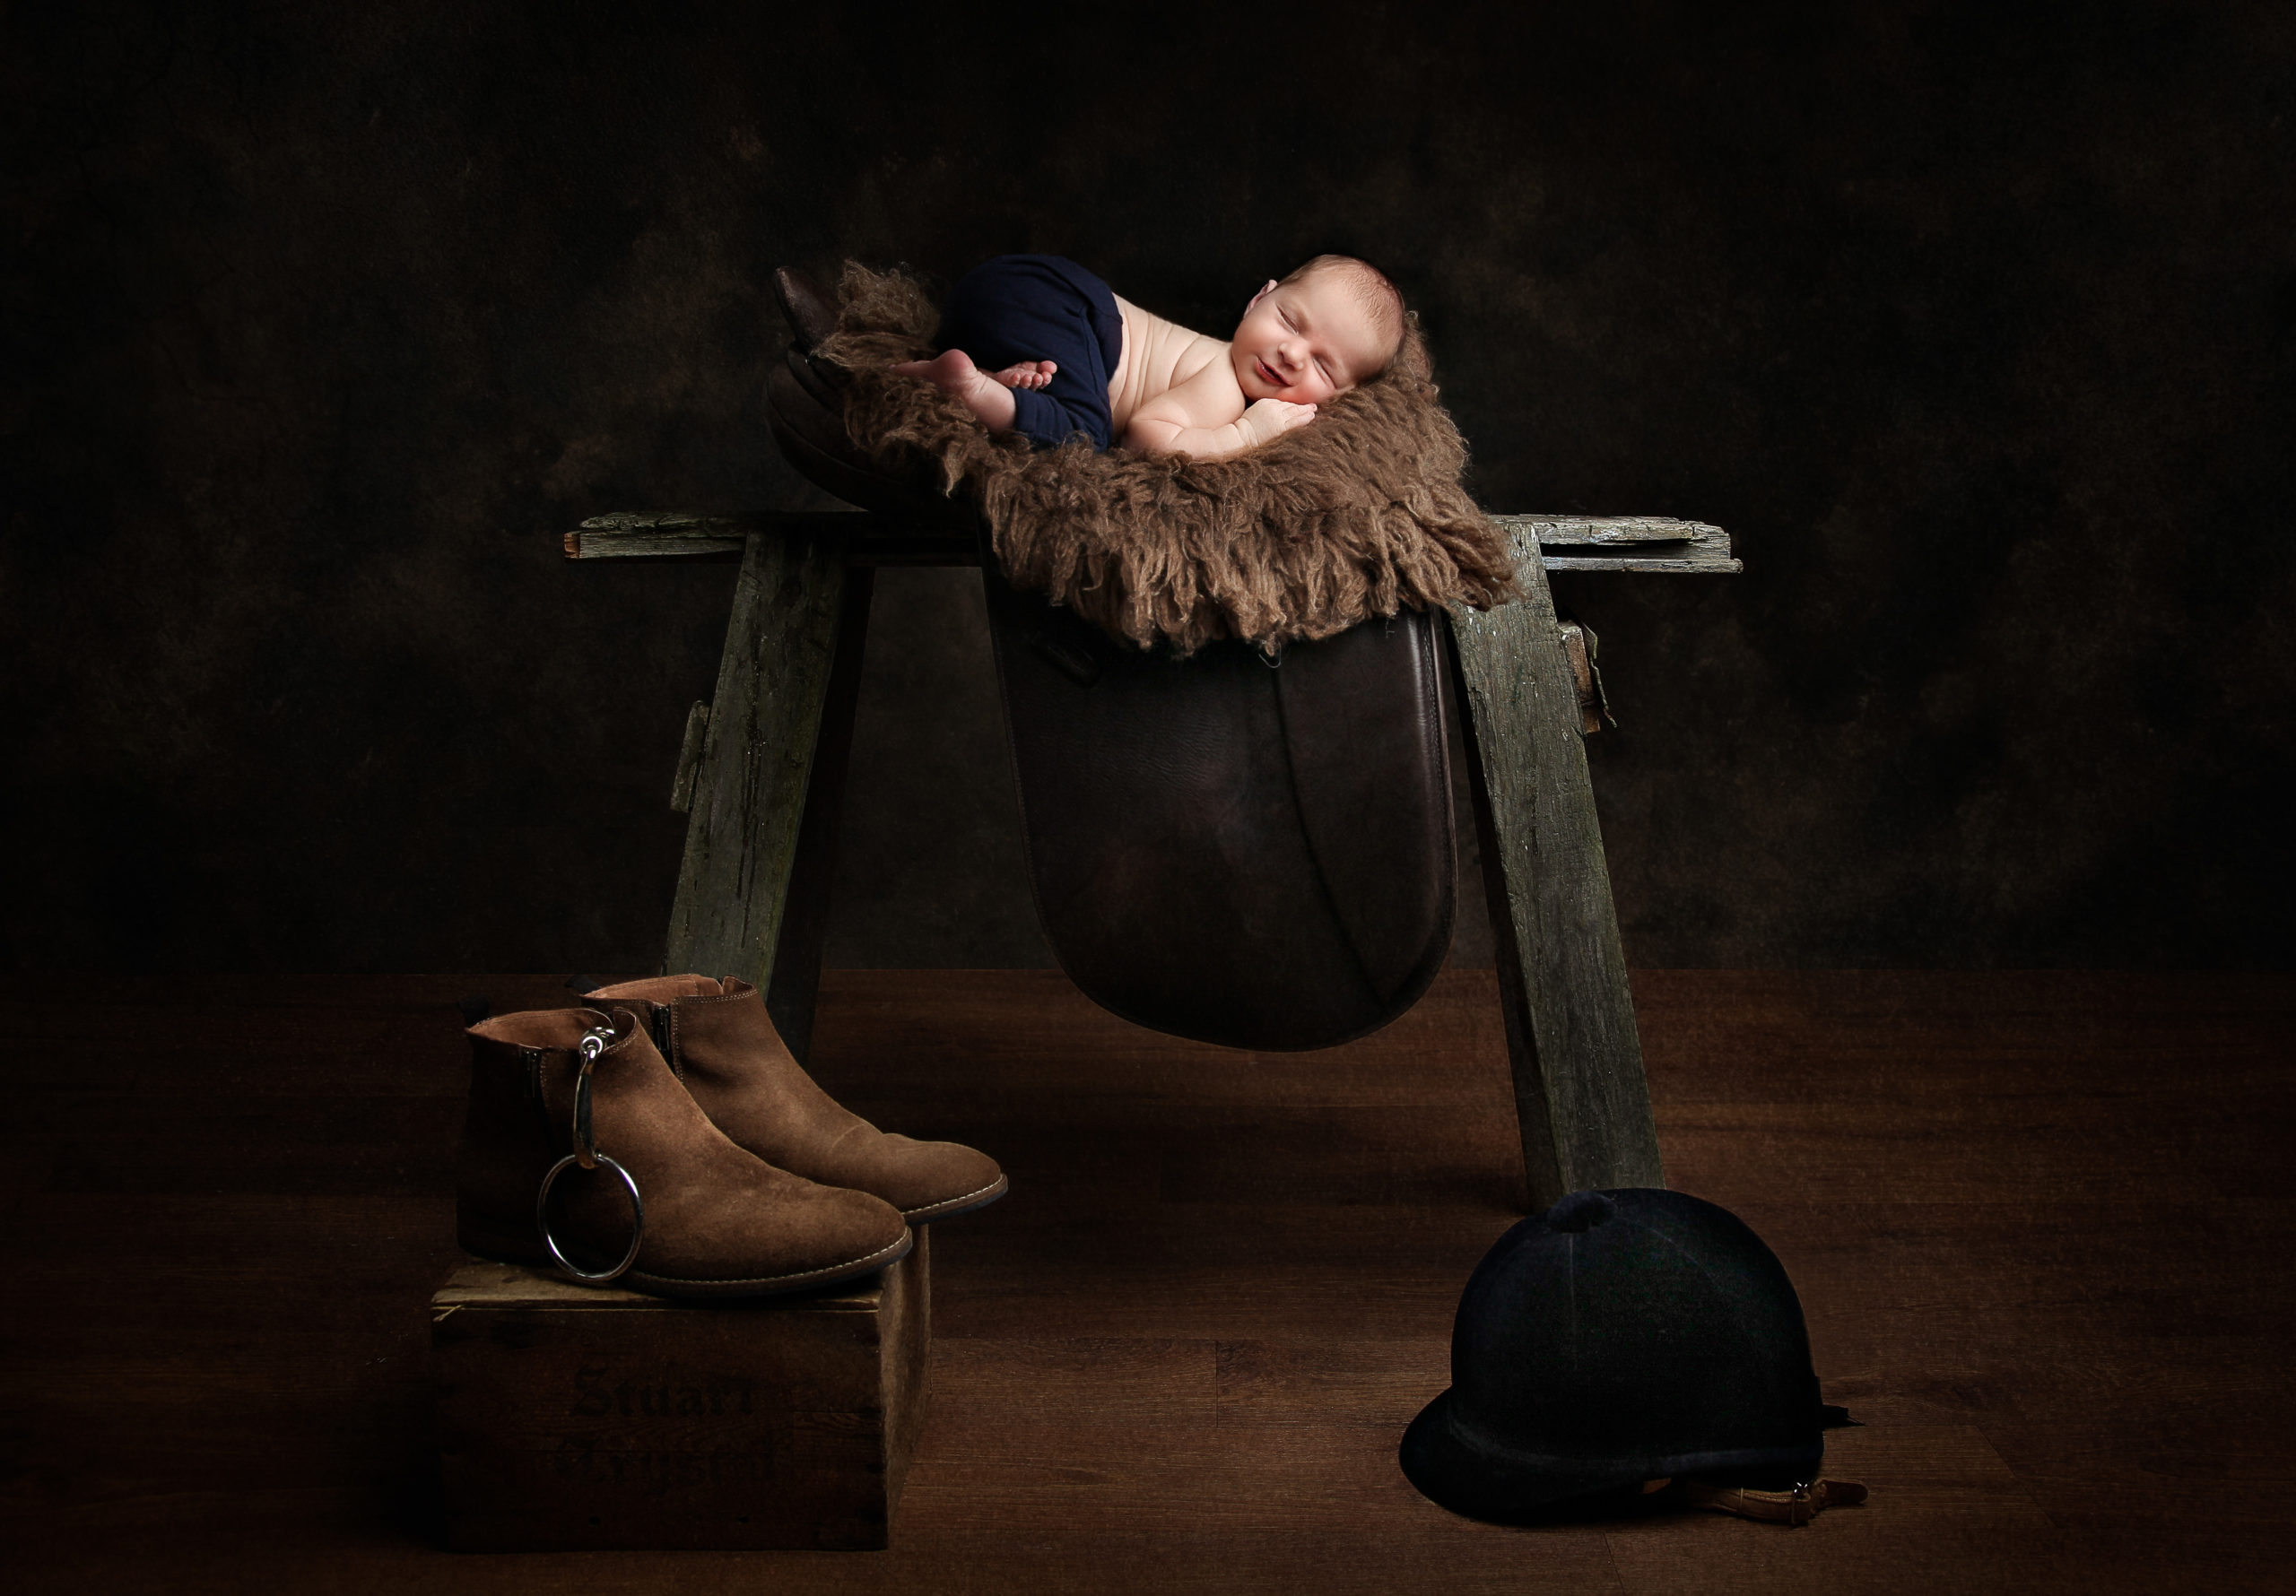 newborn baby asleep on a horse saddle by Newborn Photographer Leeds 